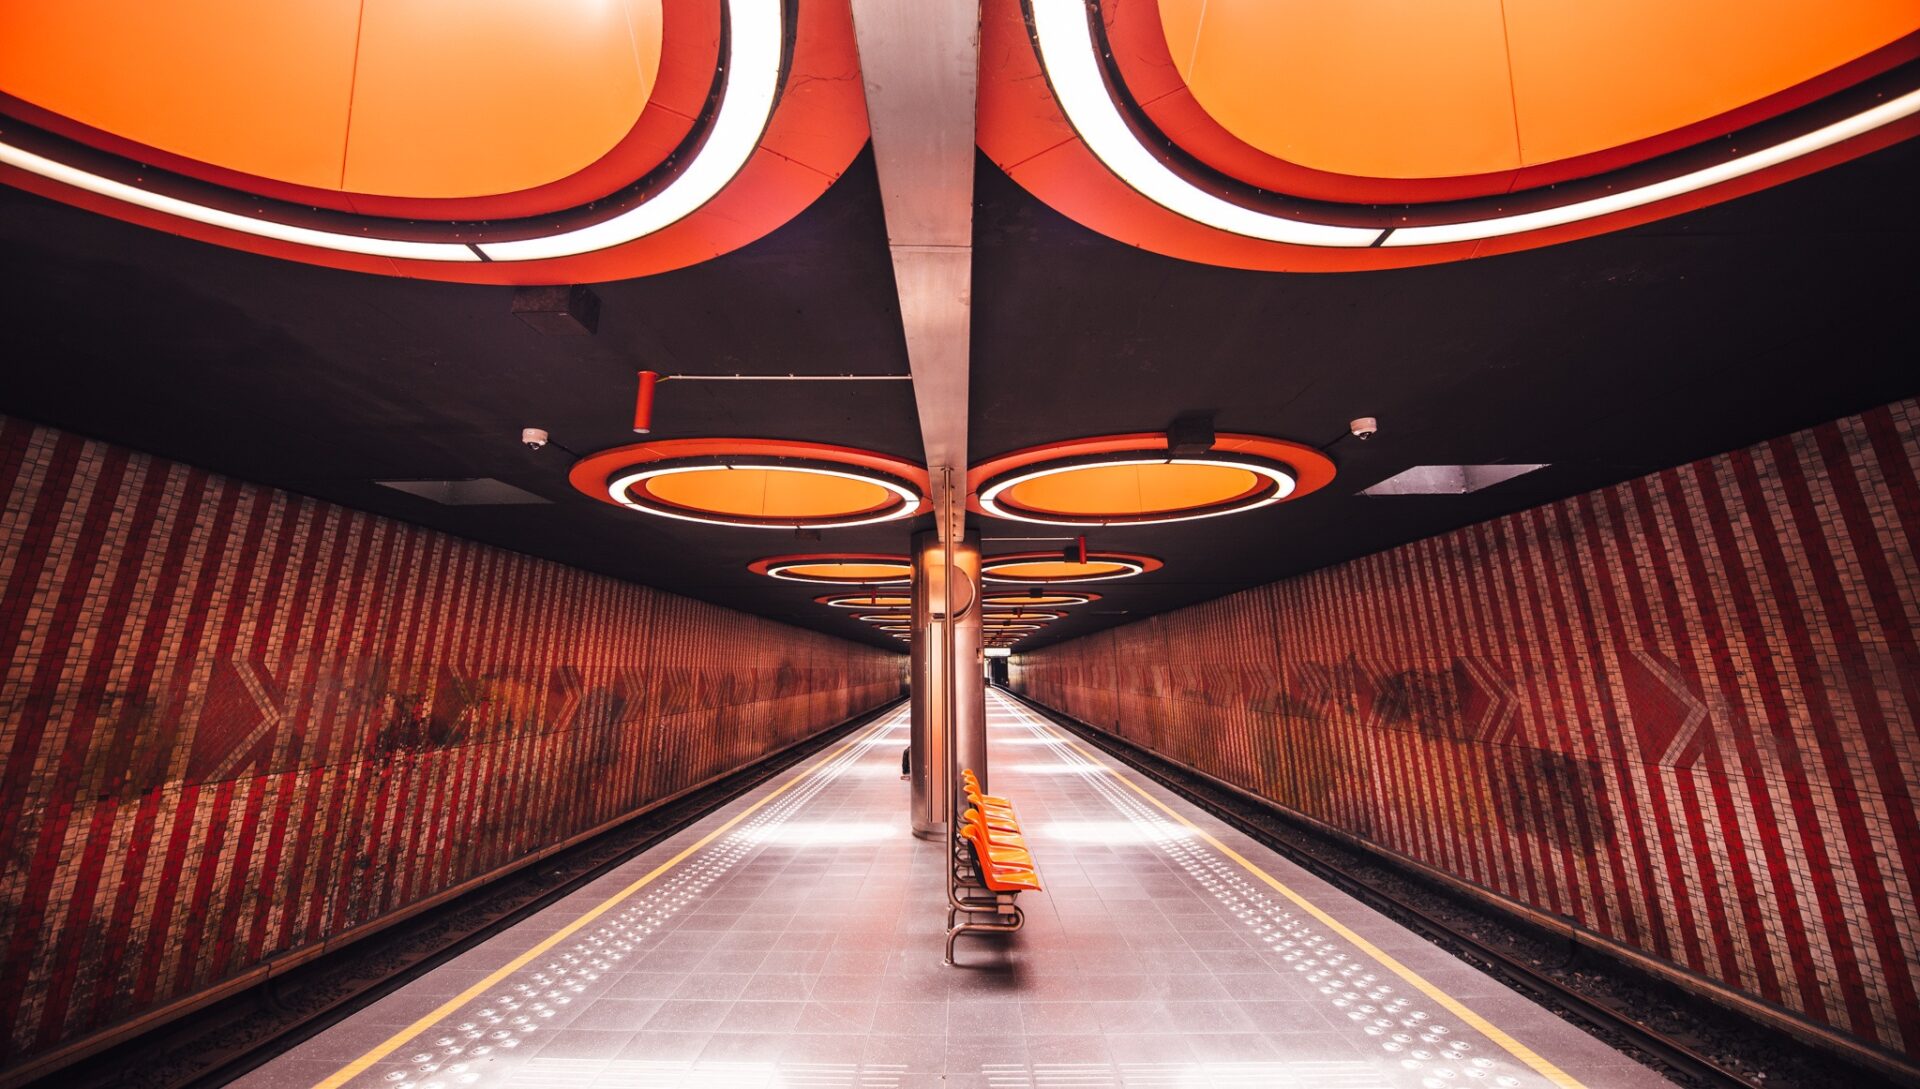 The Brussels Metro’s underground art museum